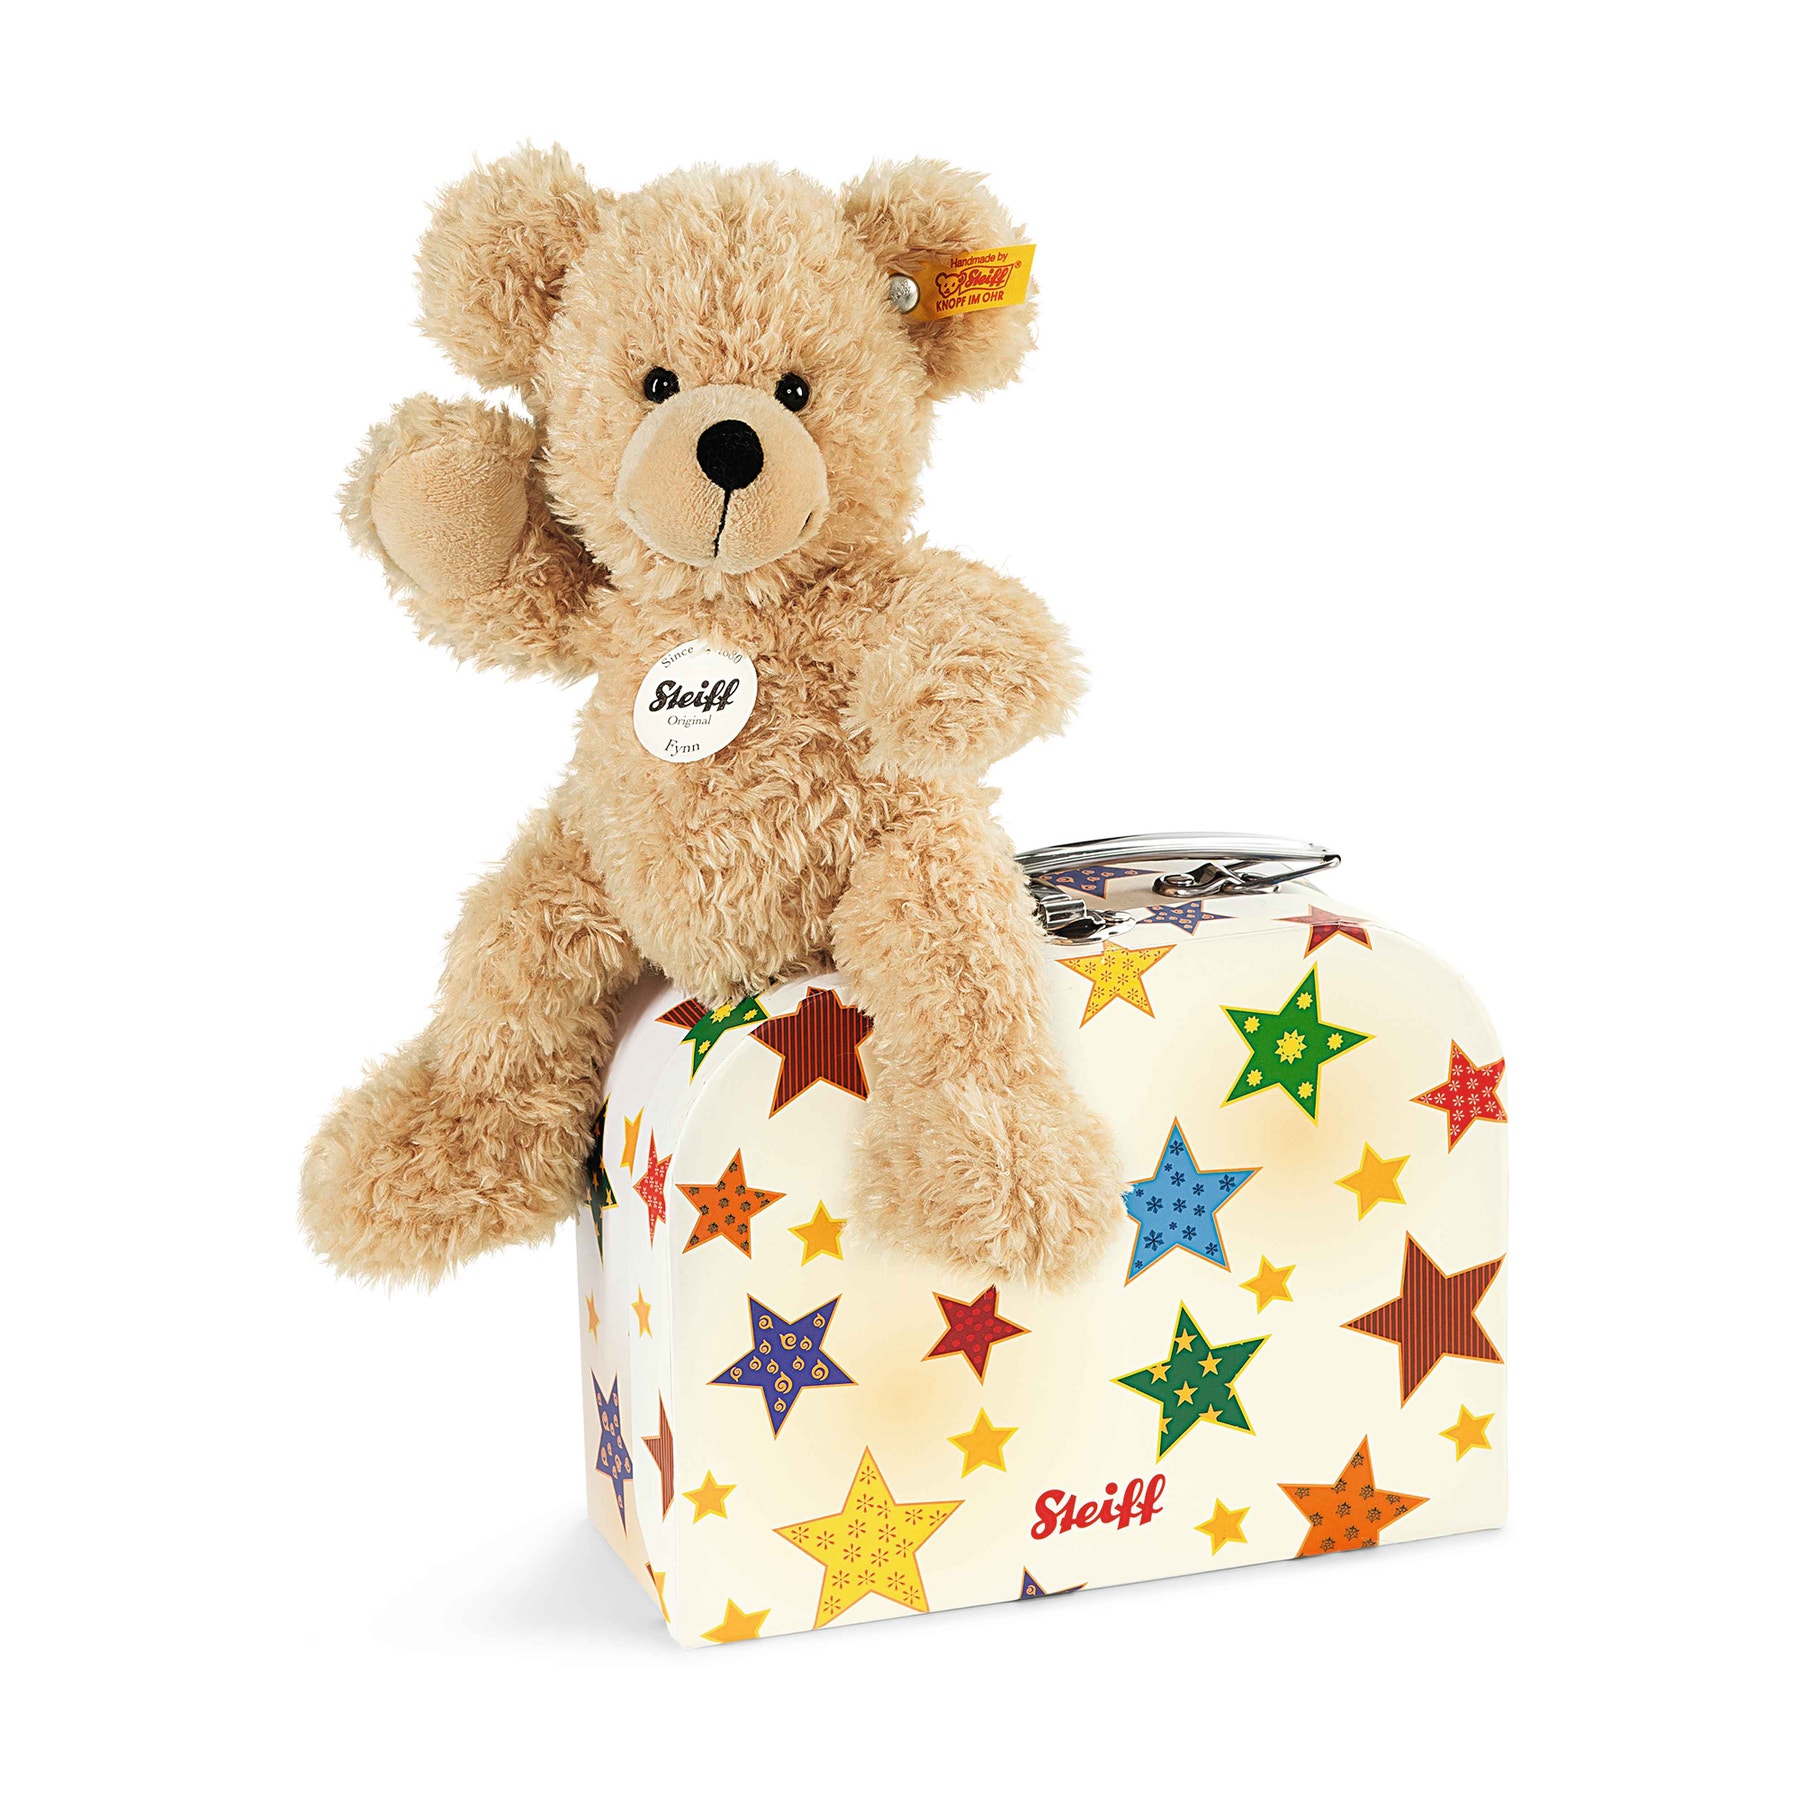 Fynn Teddybär im Koffer